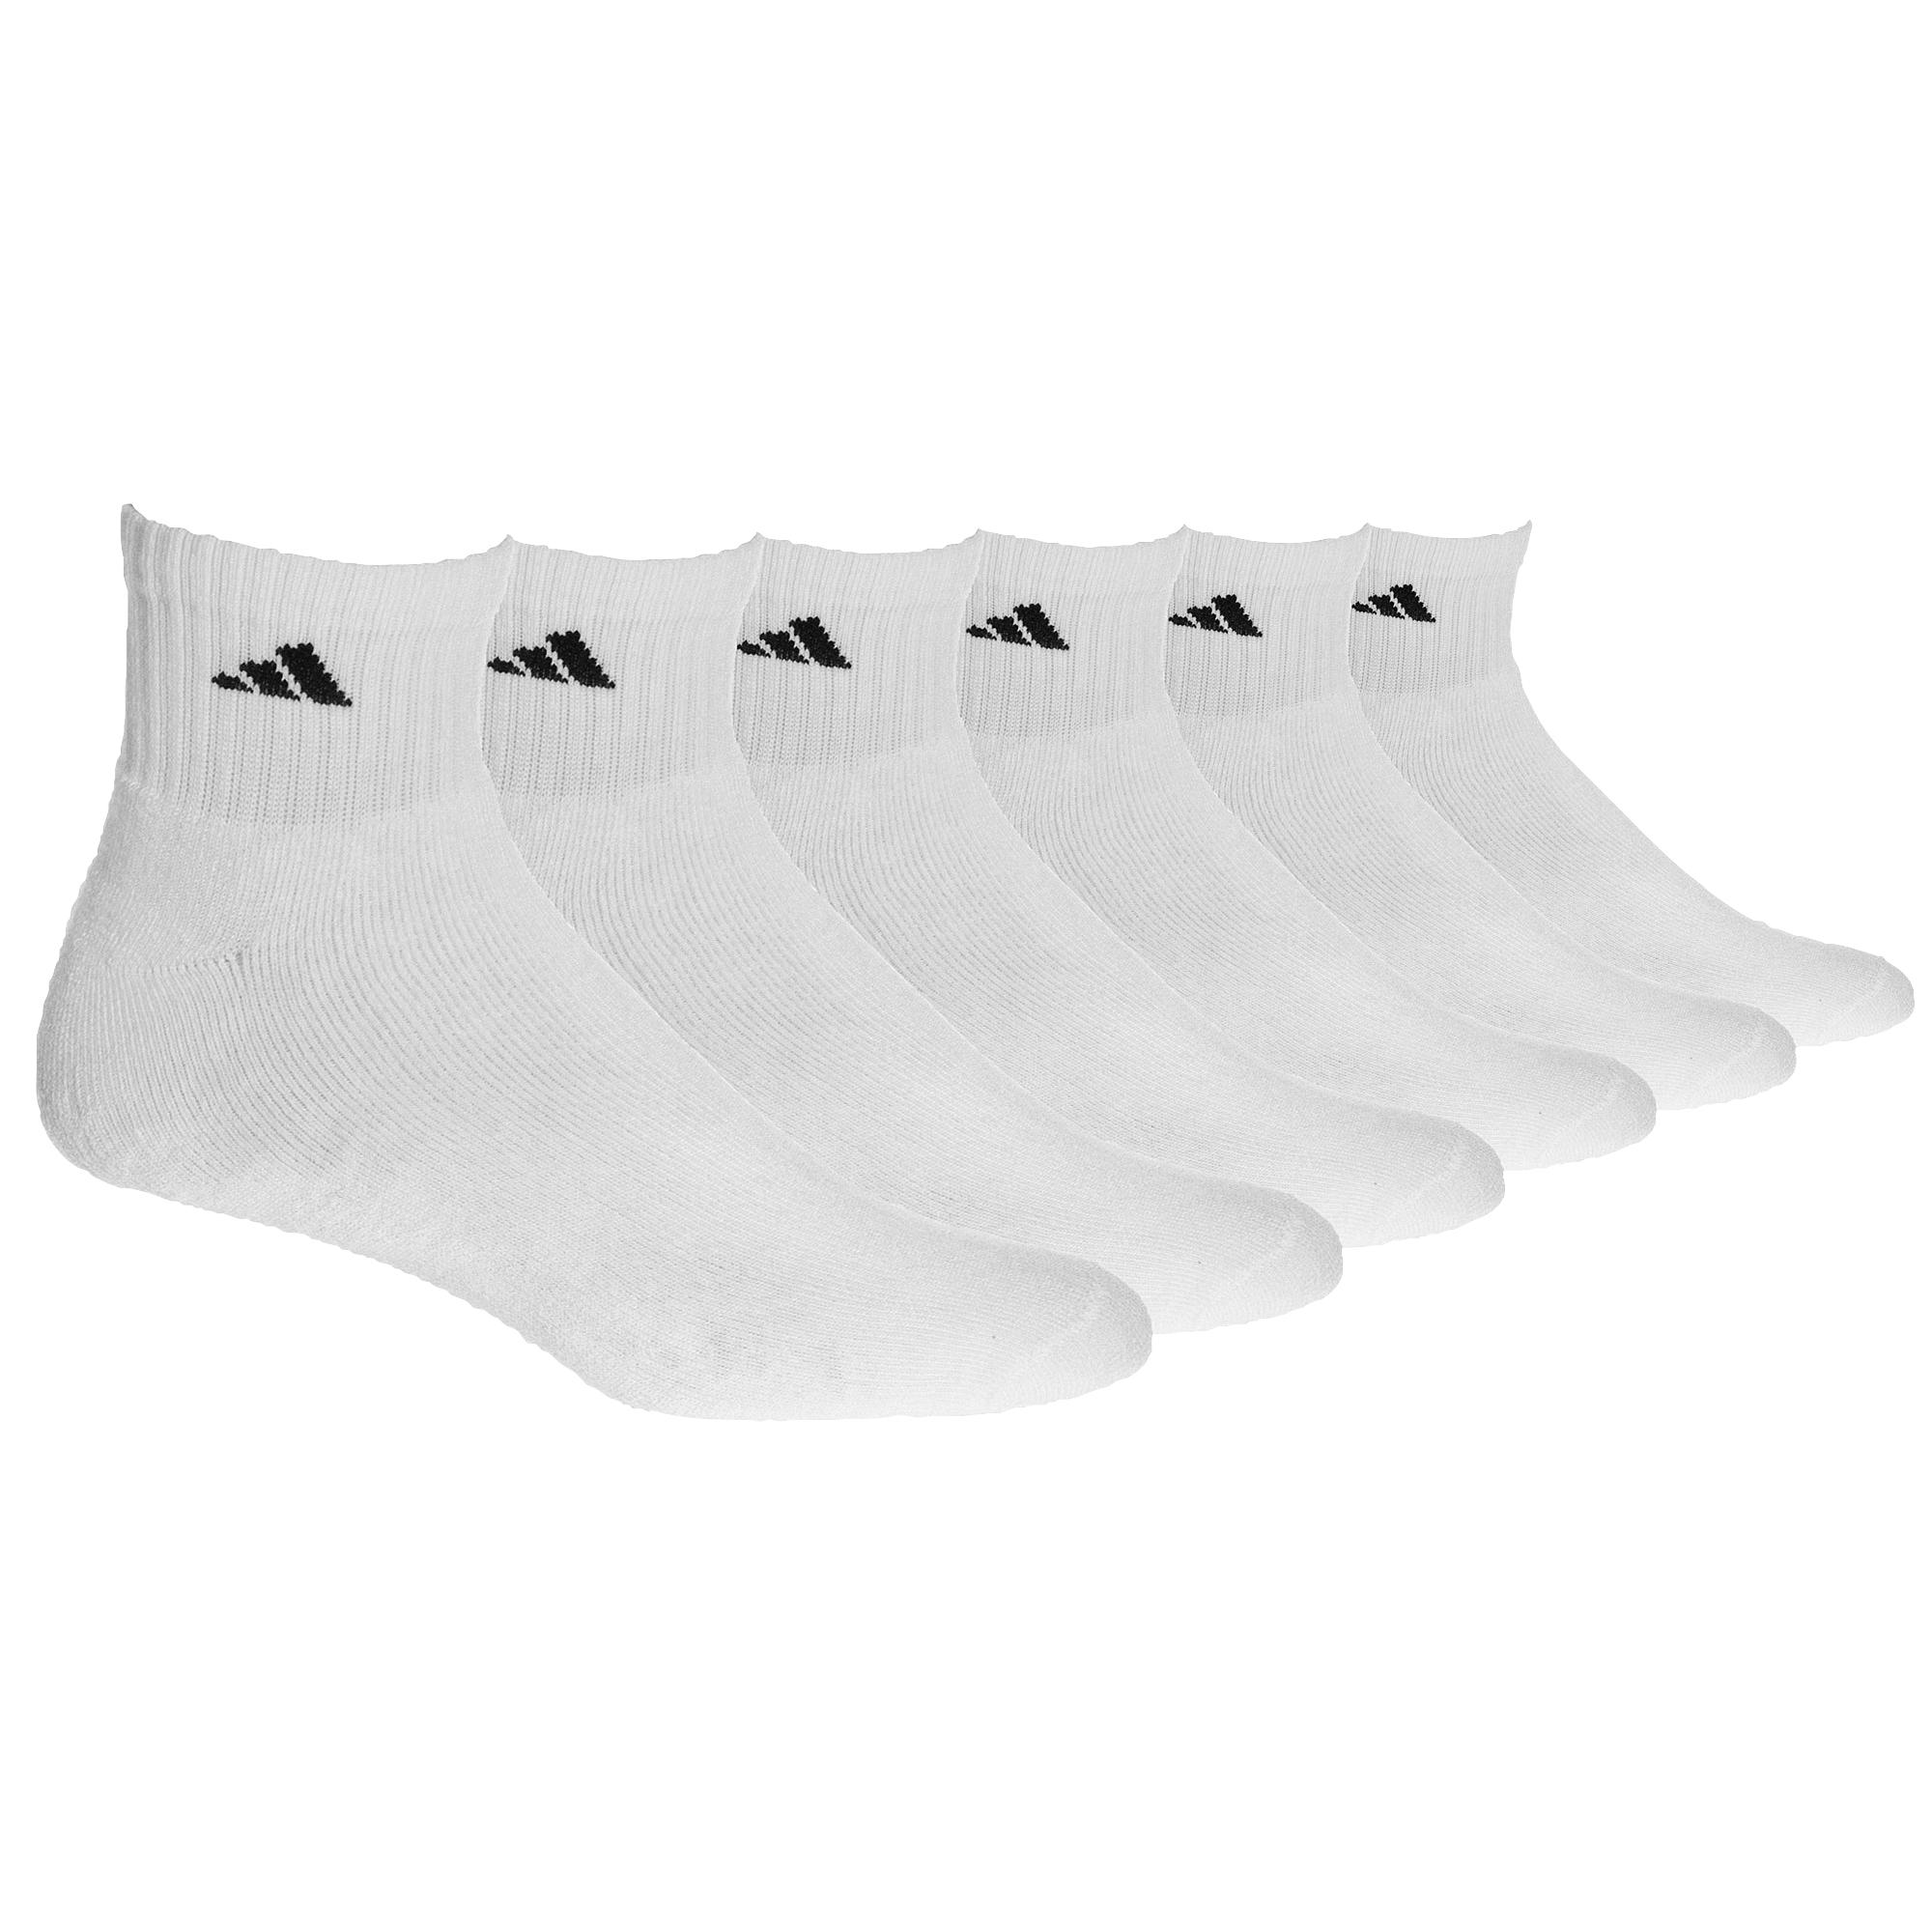 adidas Synthetic Athletic 6-pack Quarter Socks in White/Black (White ...